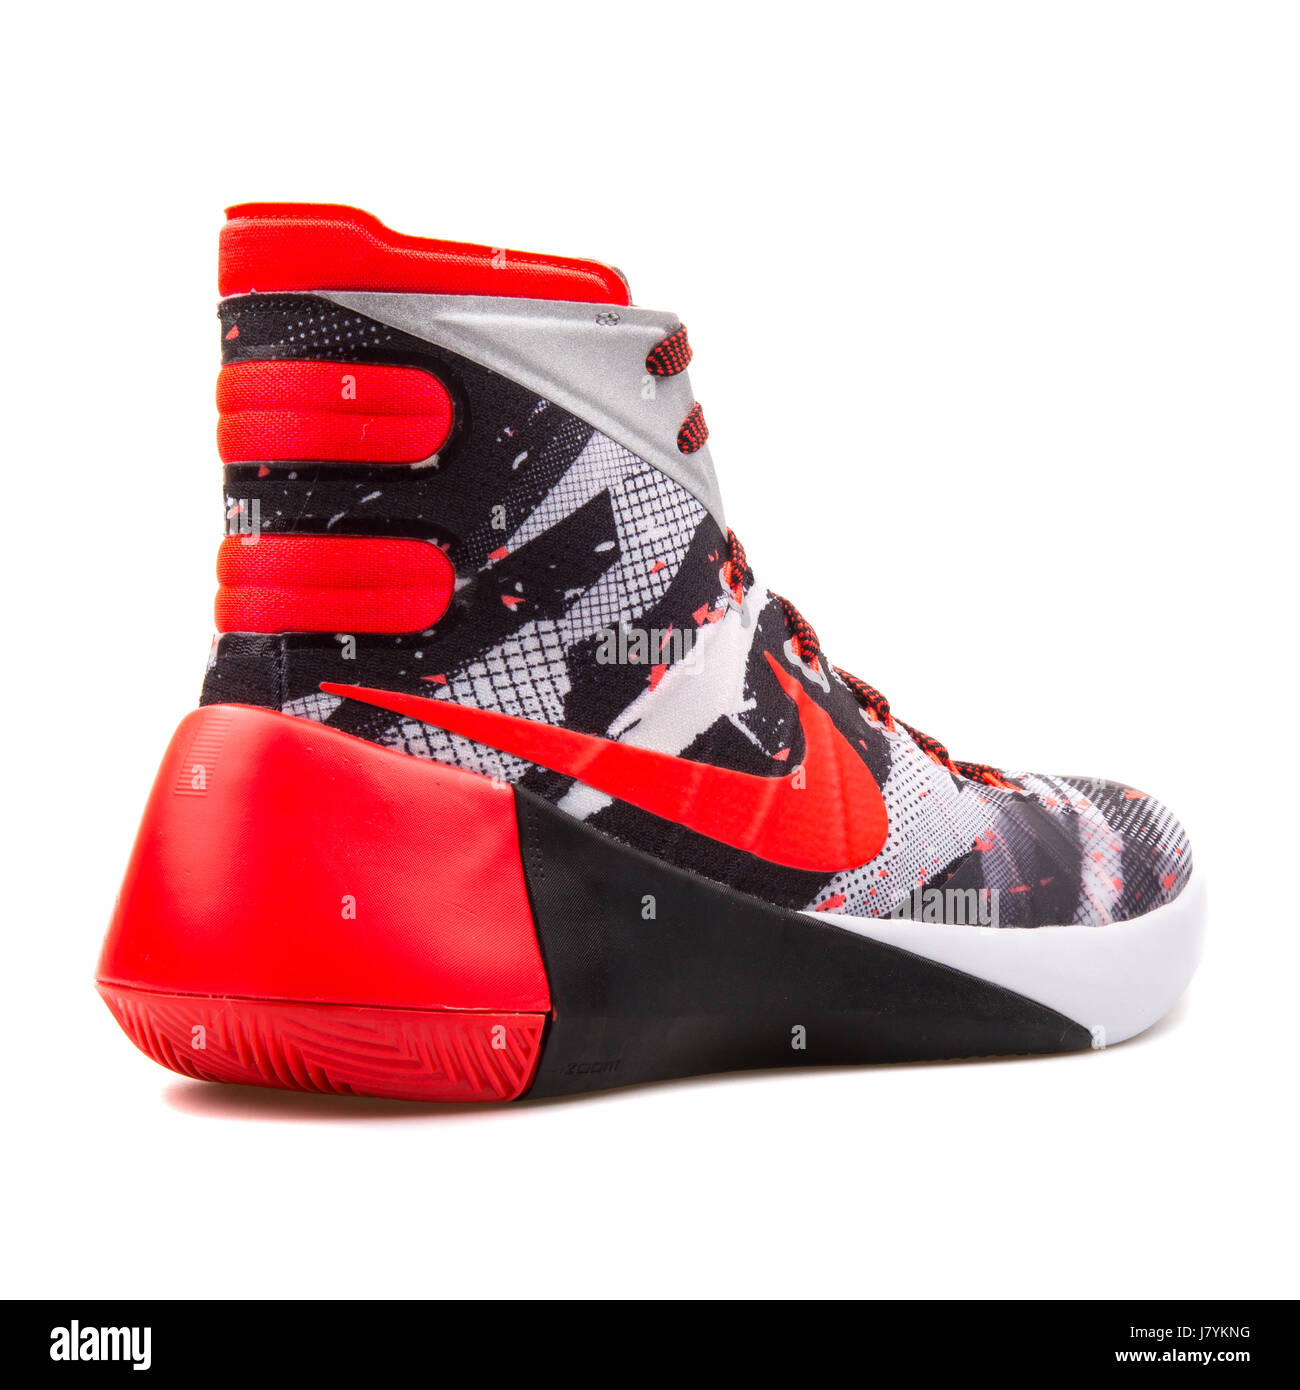 Gaseoso cómo Padre Nike Hyperdunk 2015 PRM zapatillas de baloncesto masculino - 749567-160  Fotografía de stock - Alamy